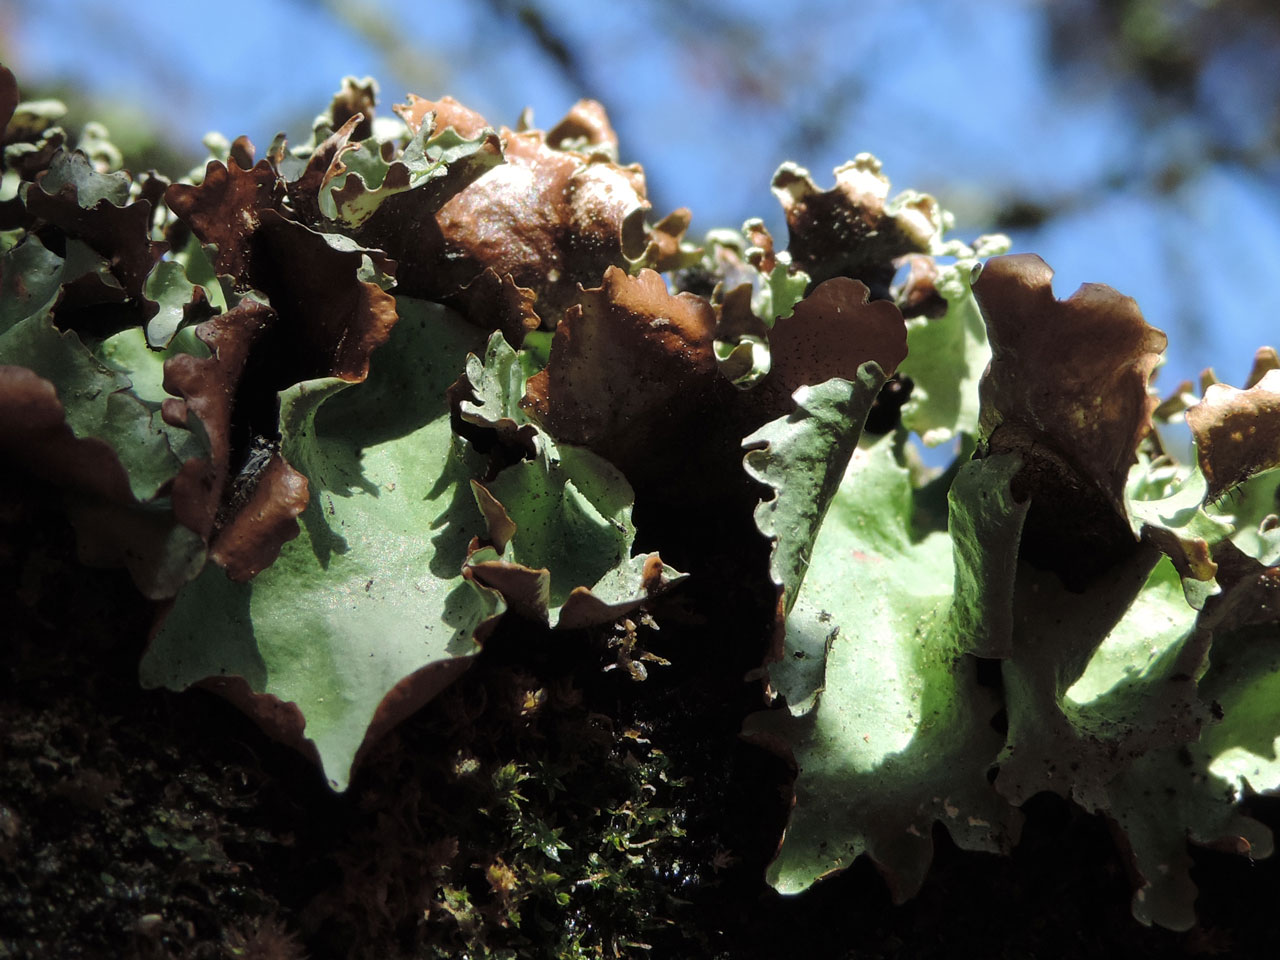 Parmotrema pseudoreticulatum, thallus underside, Beech twig, Mark Ash Wood, New Forest